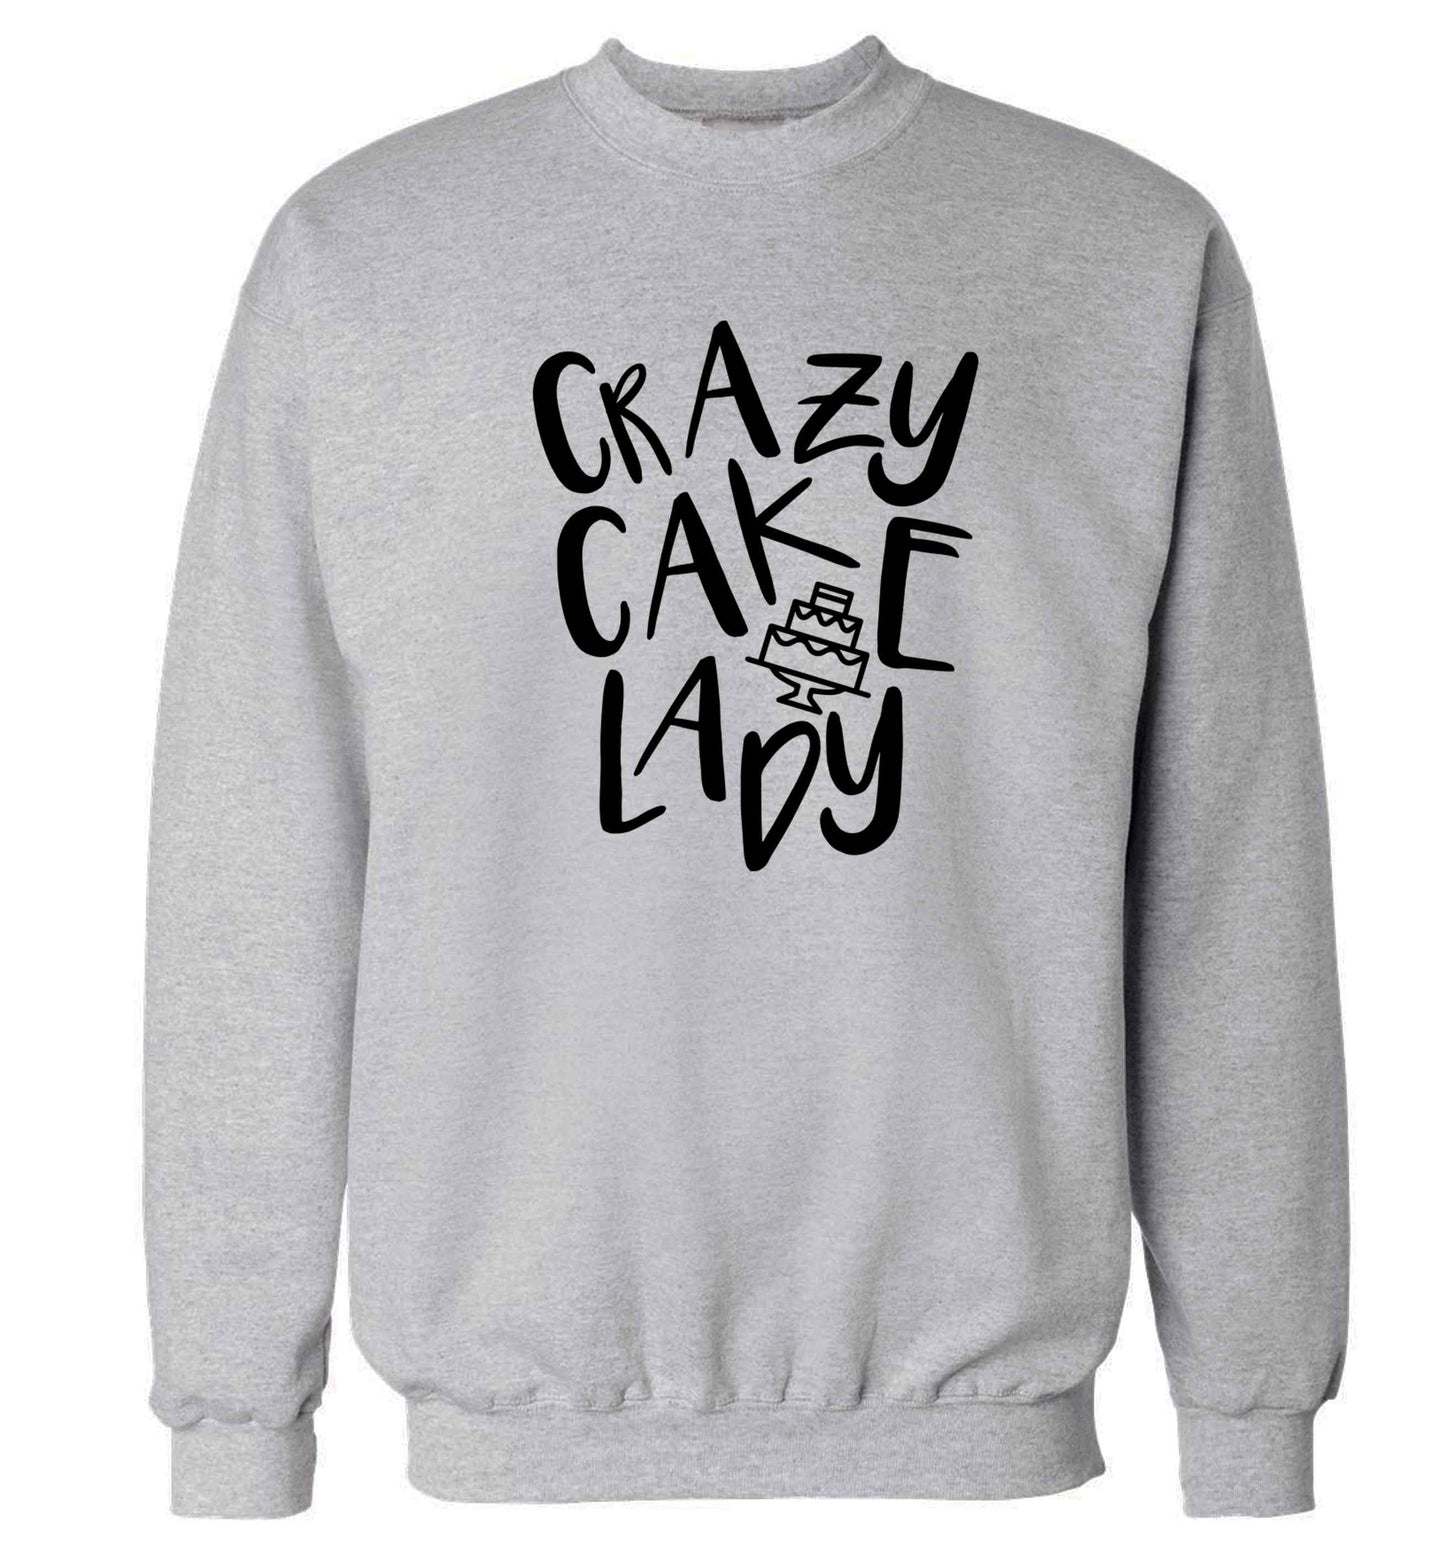 Crazy cake lady Adult's unisex grey Sweater 2XL